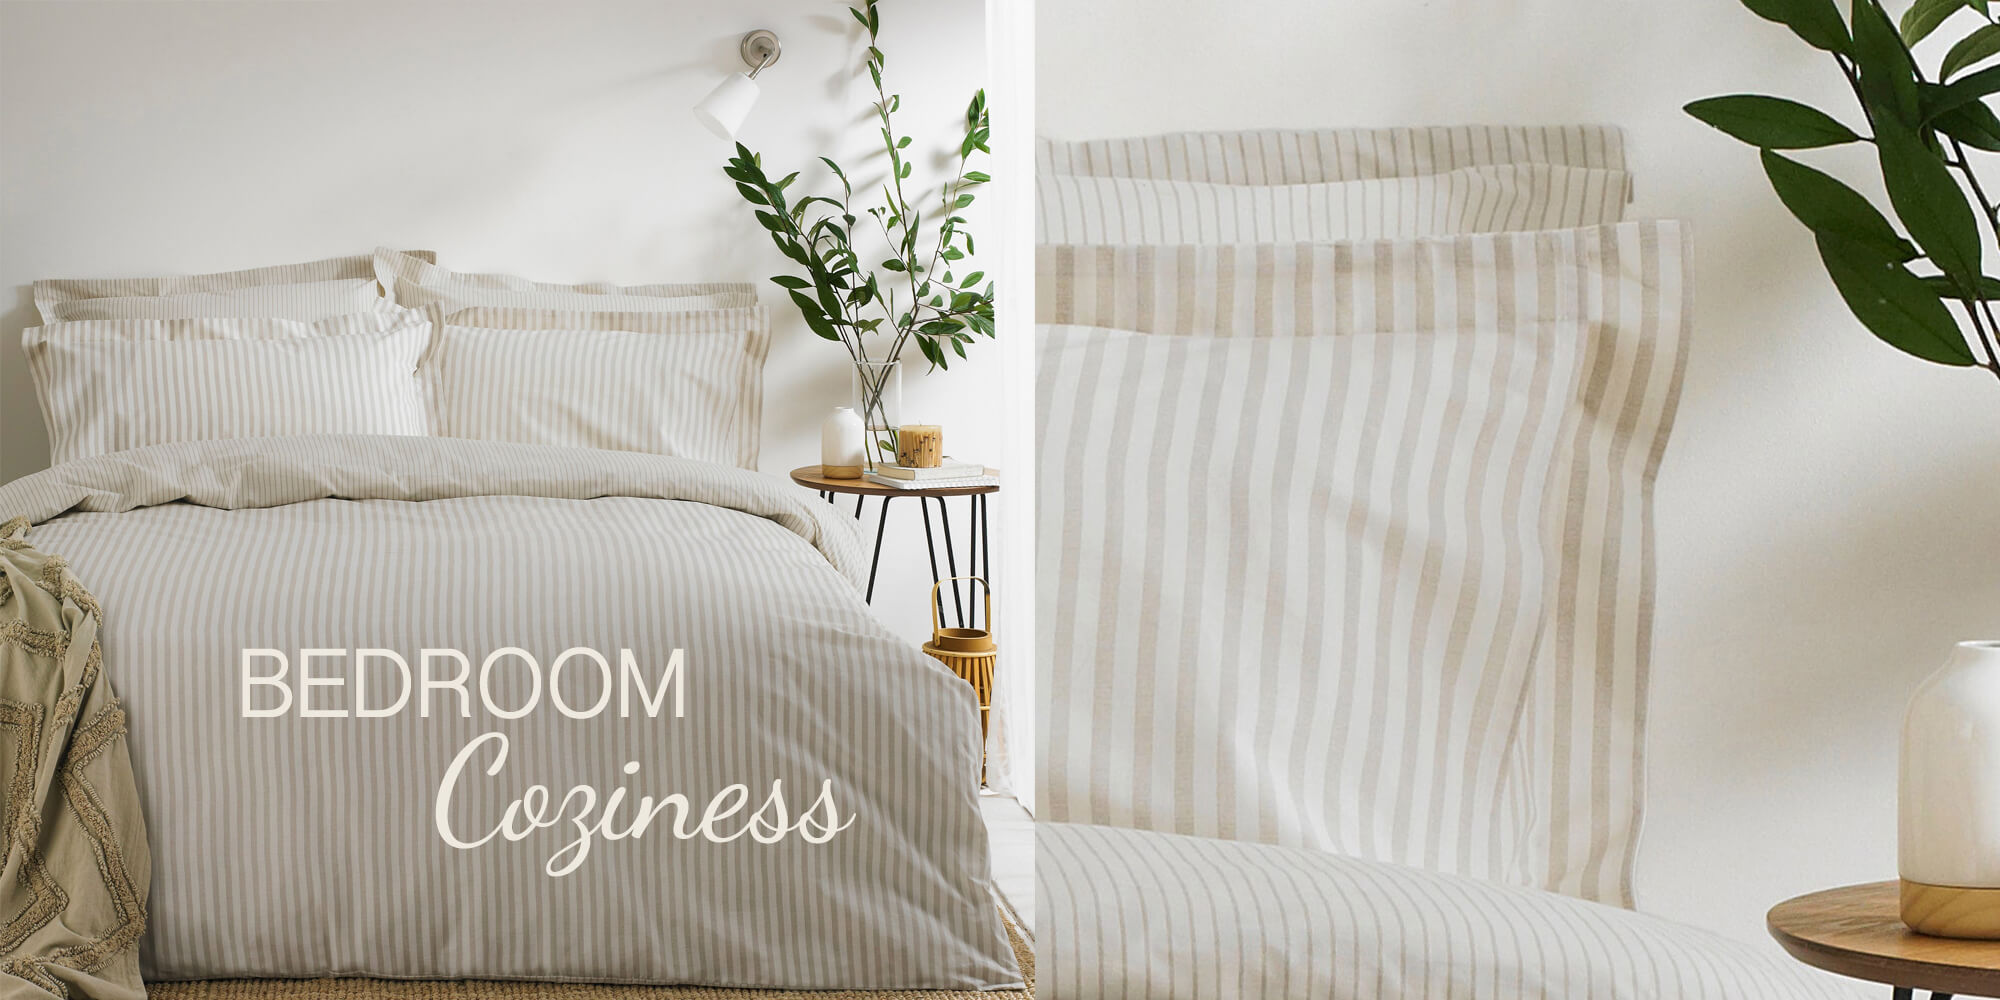 New Collection: Bedroom Coziness